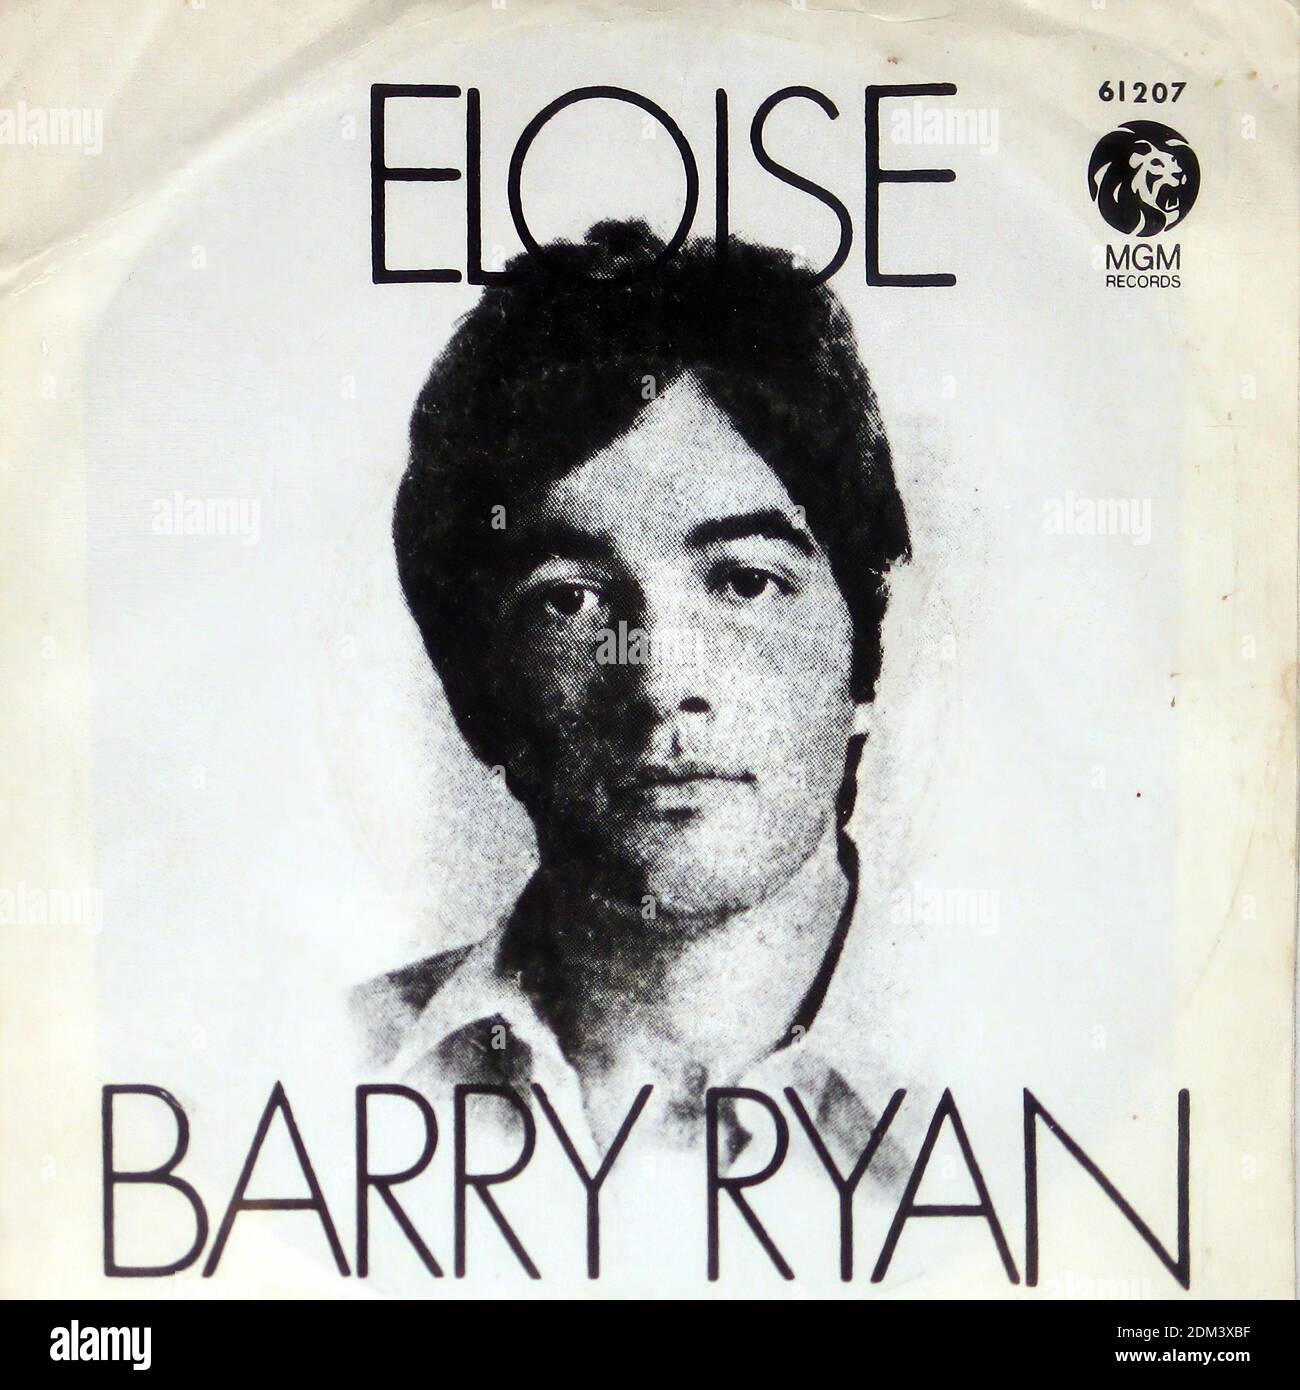 Barry Ryan Eloise 7 vinyl Single - Vintage Vinyl Record Cover Stock Photo -  Alamy